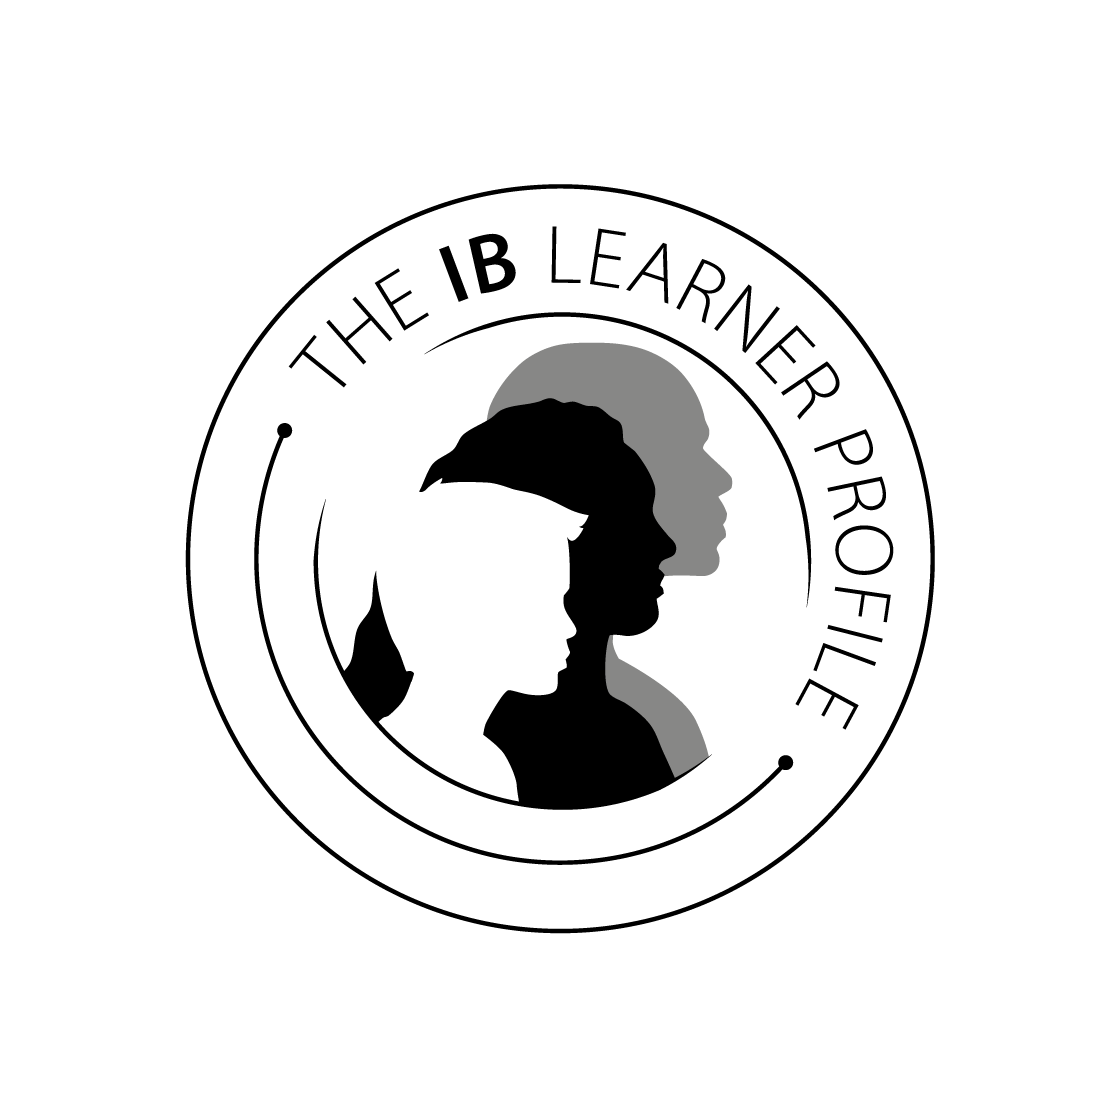 IB learner profile black and white